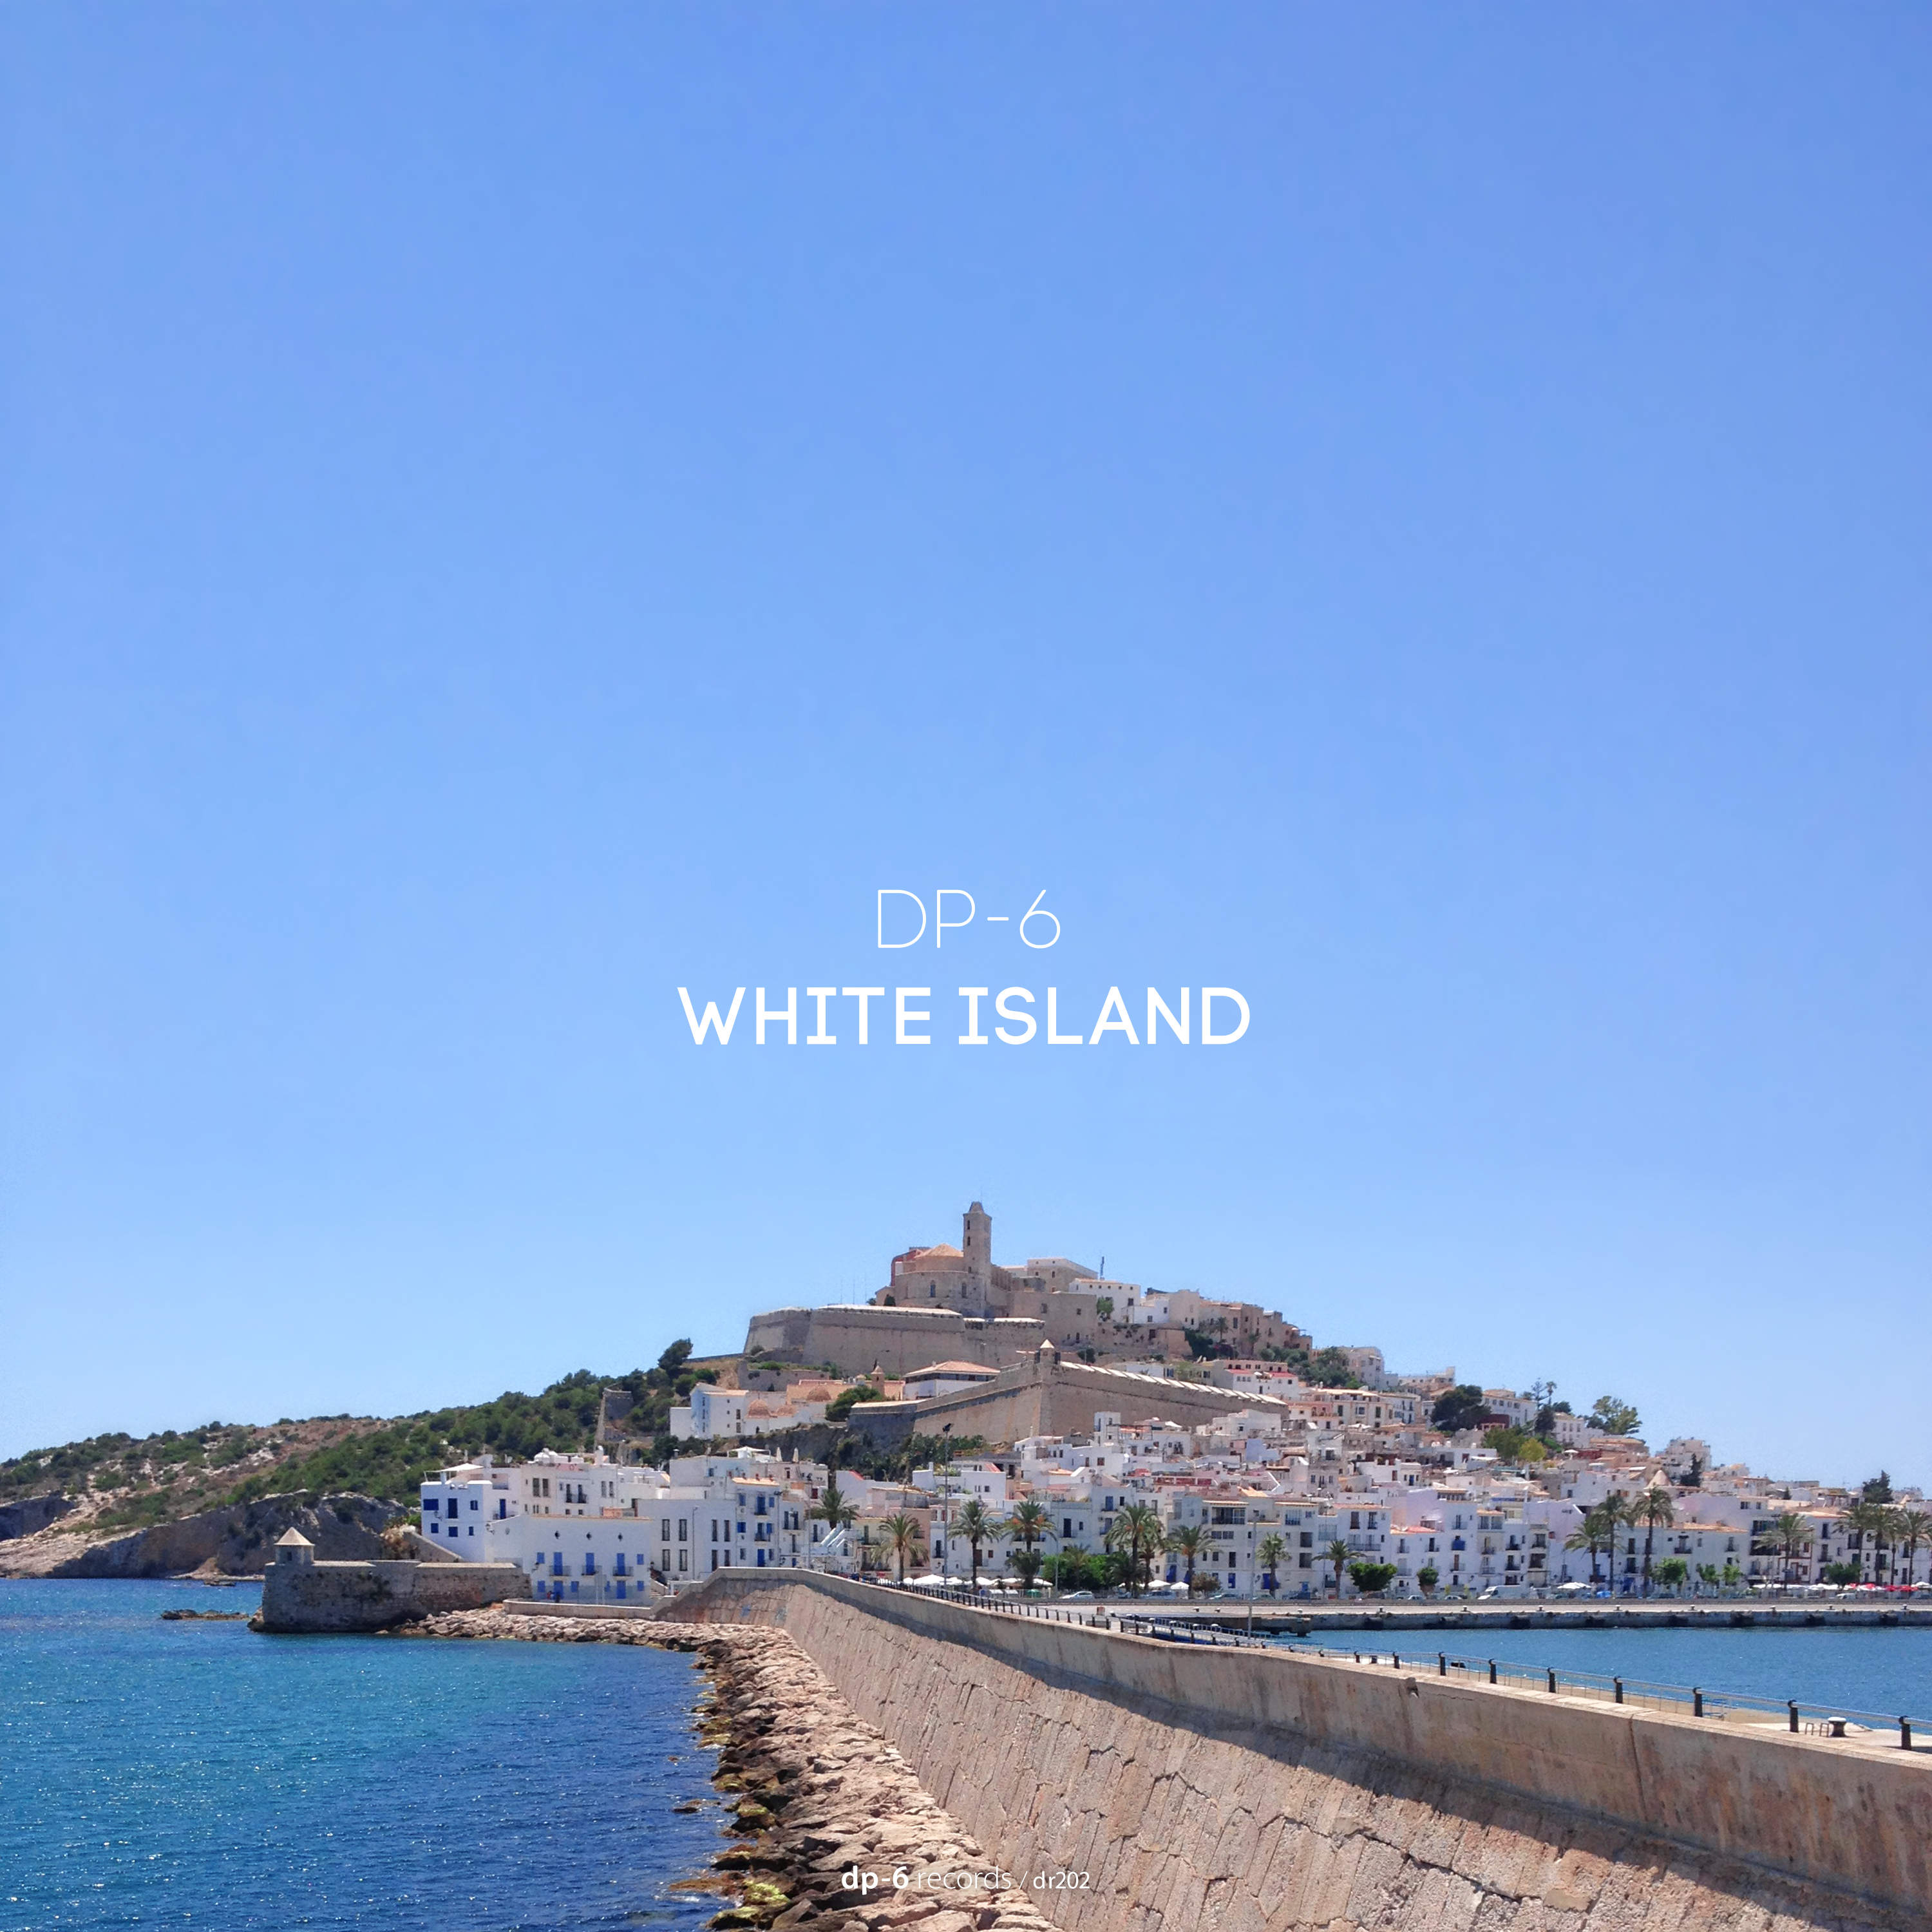 DP-6: White Island